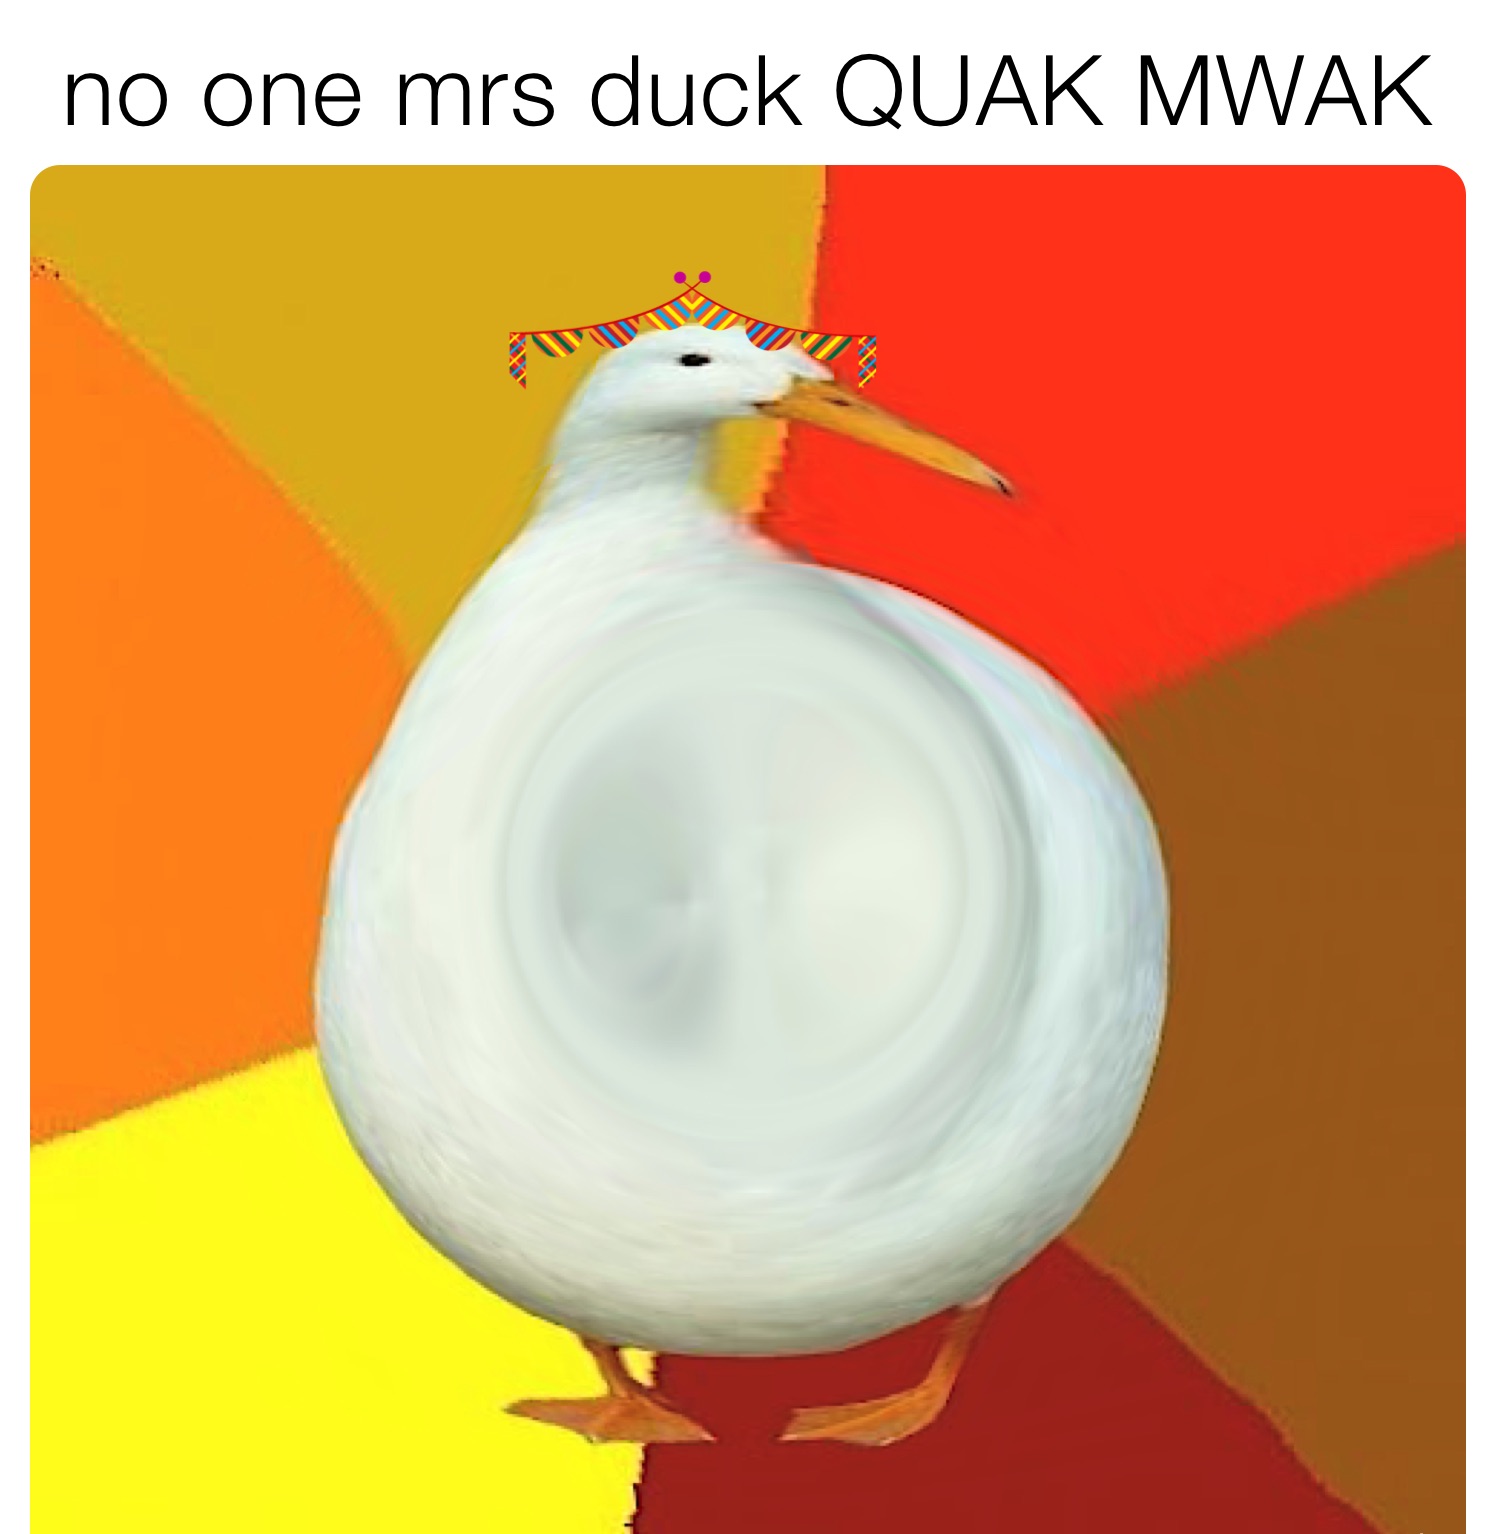 no one mrs duck QUAK MWAK